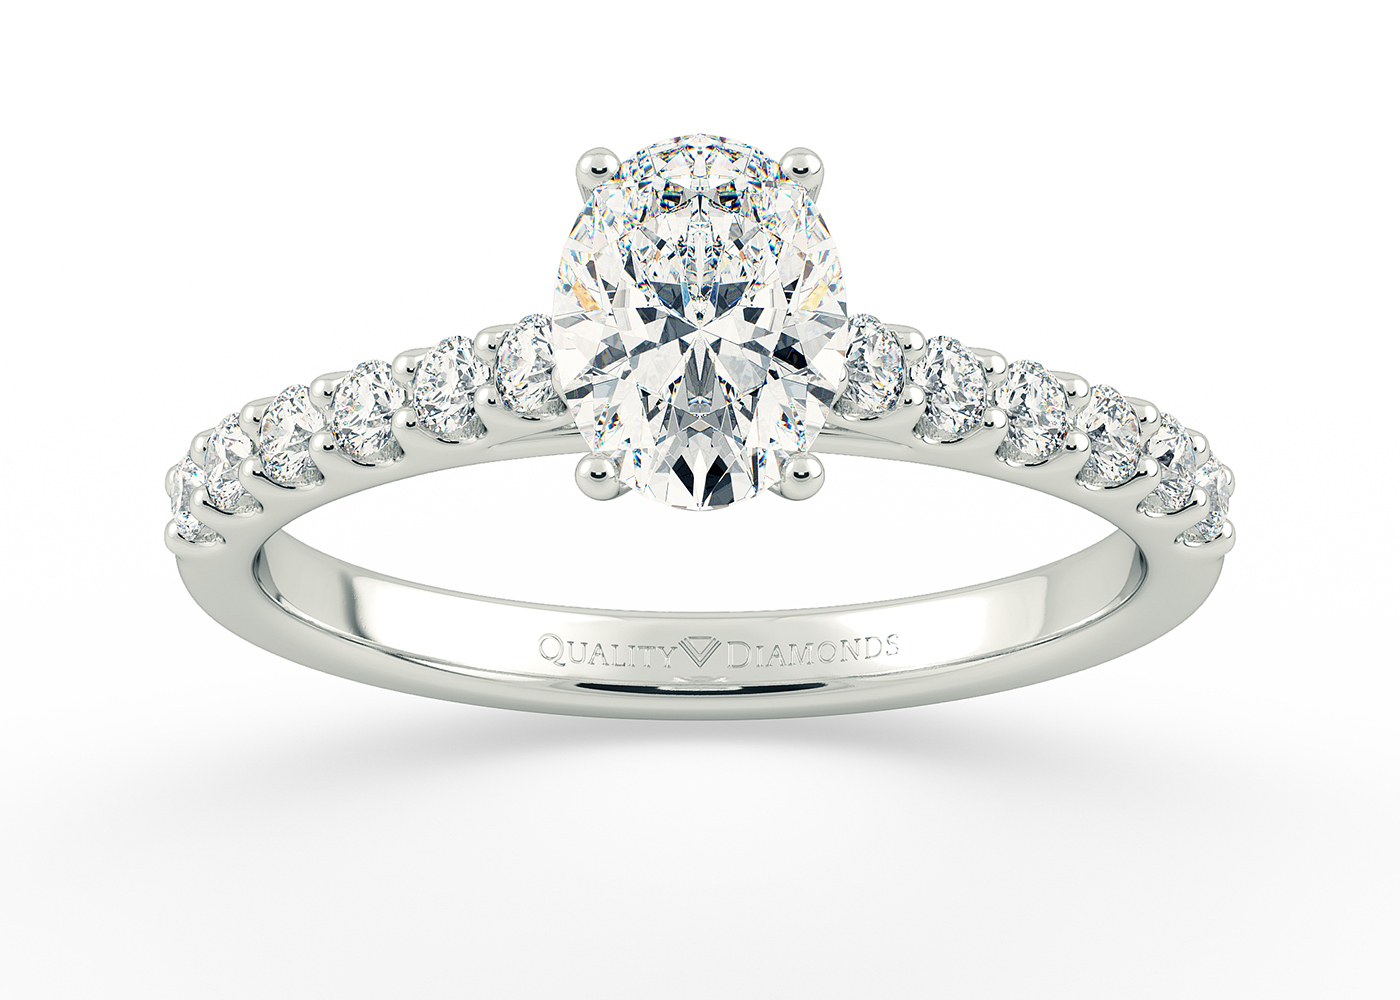 One Carat Oval Diamond Set Diamond Engagement Ring in Platinum 950